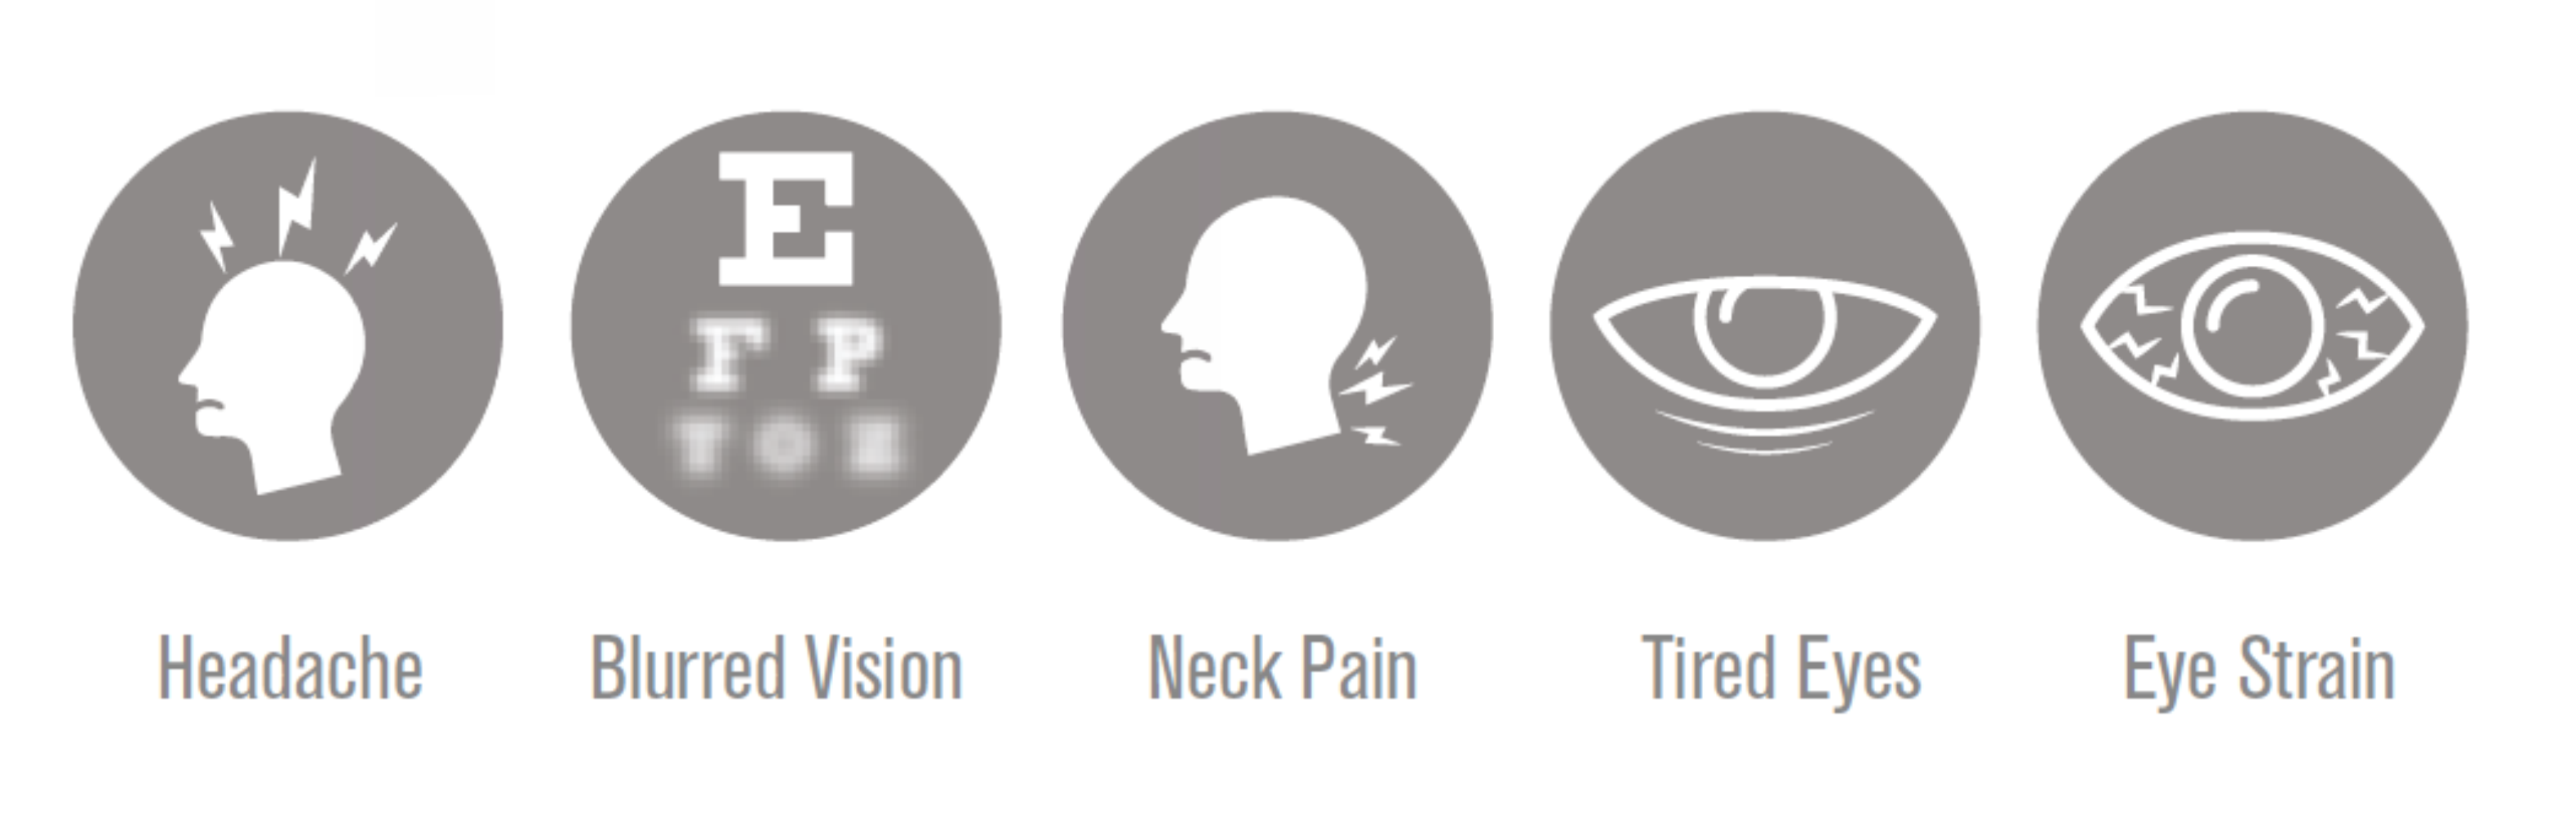 Symptoms of Eye Strain